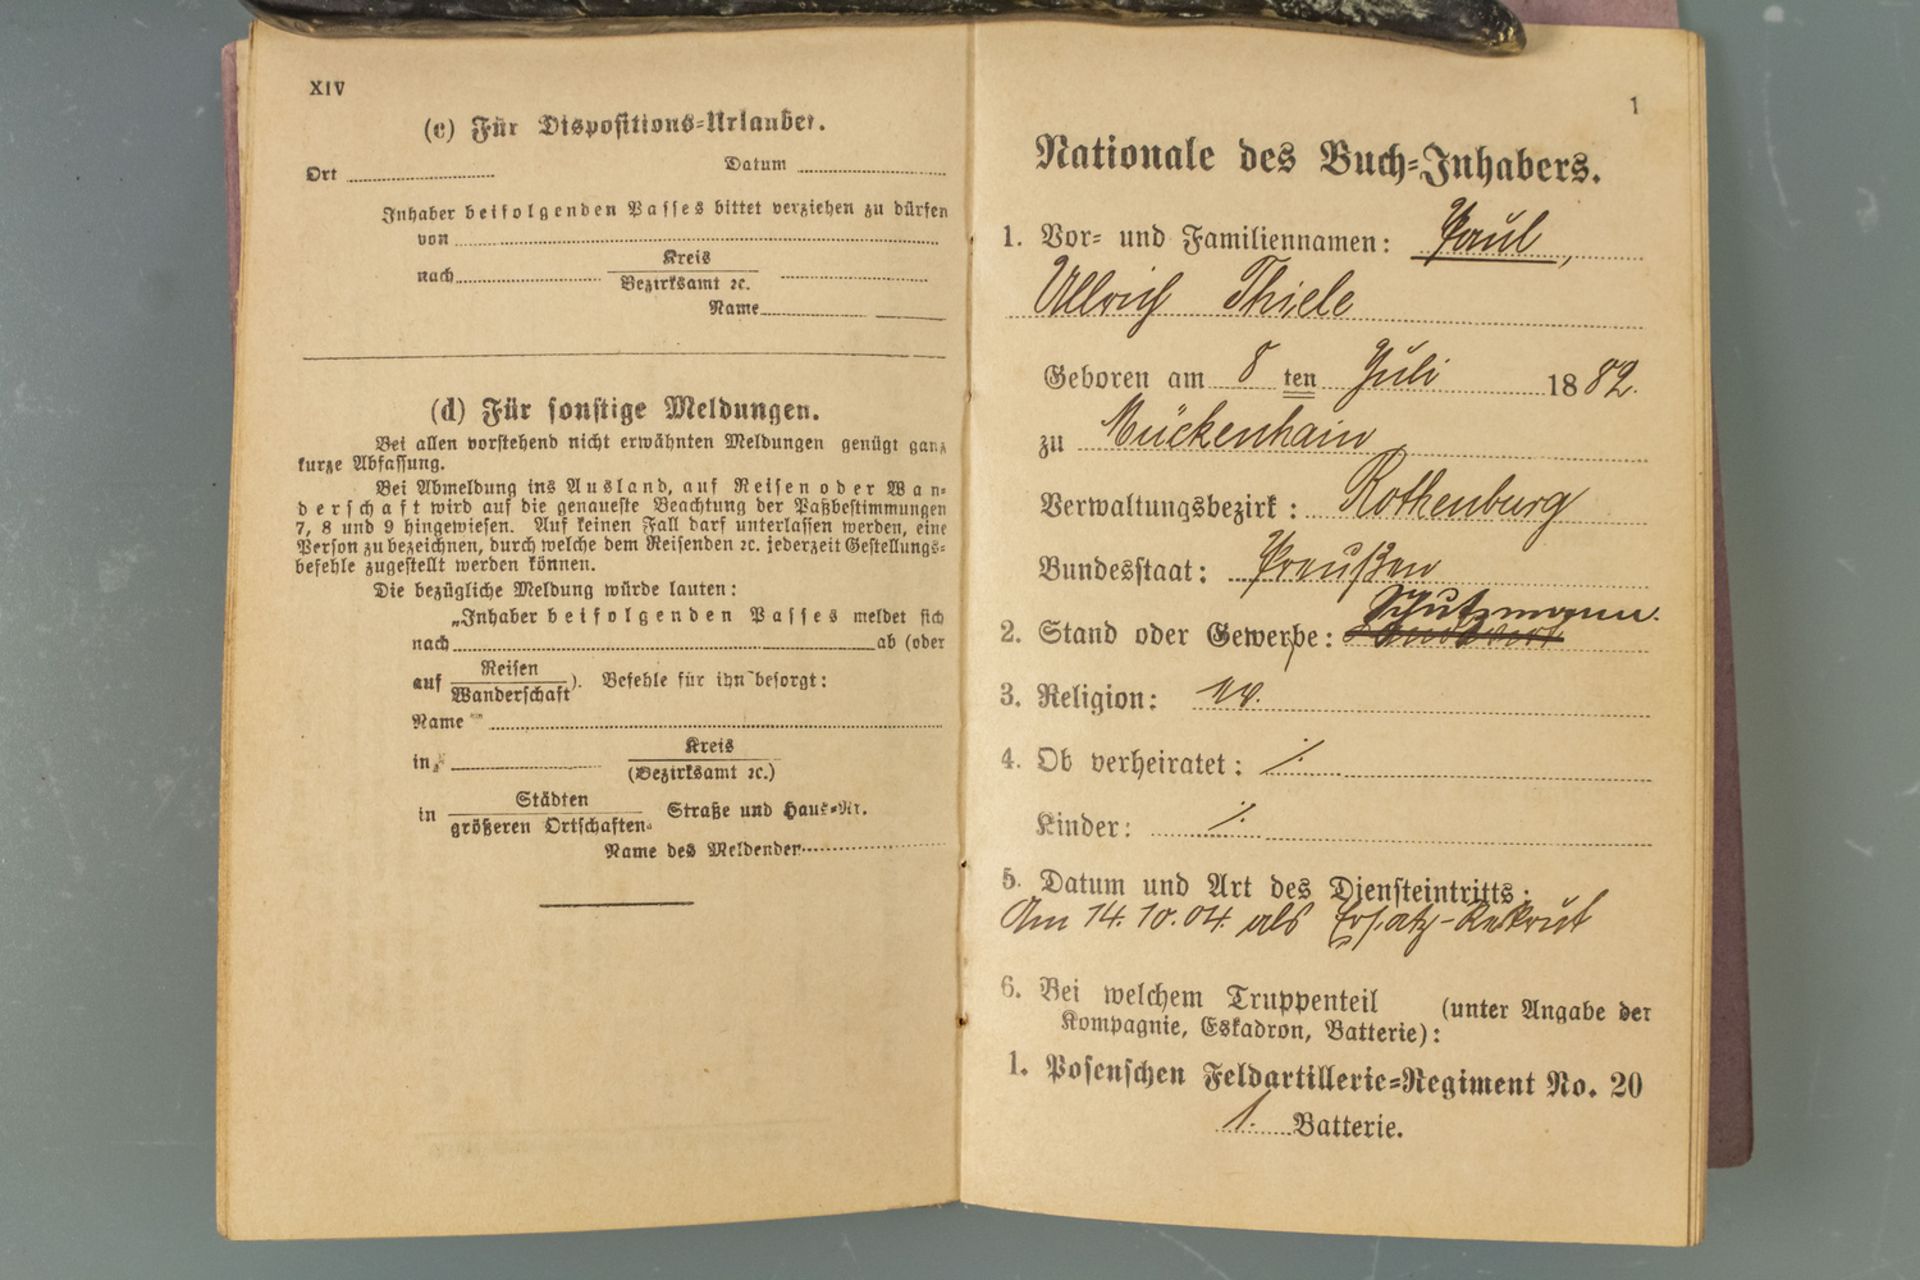 Militär-Pass / A military passport, Jahresklasse 1904 - Image 3 of 4